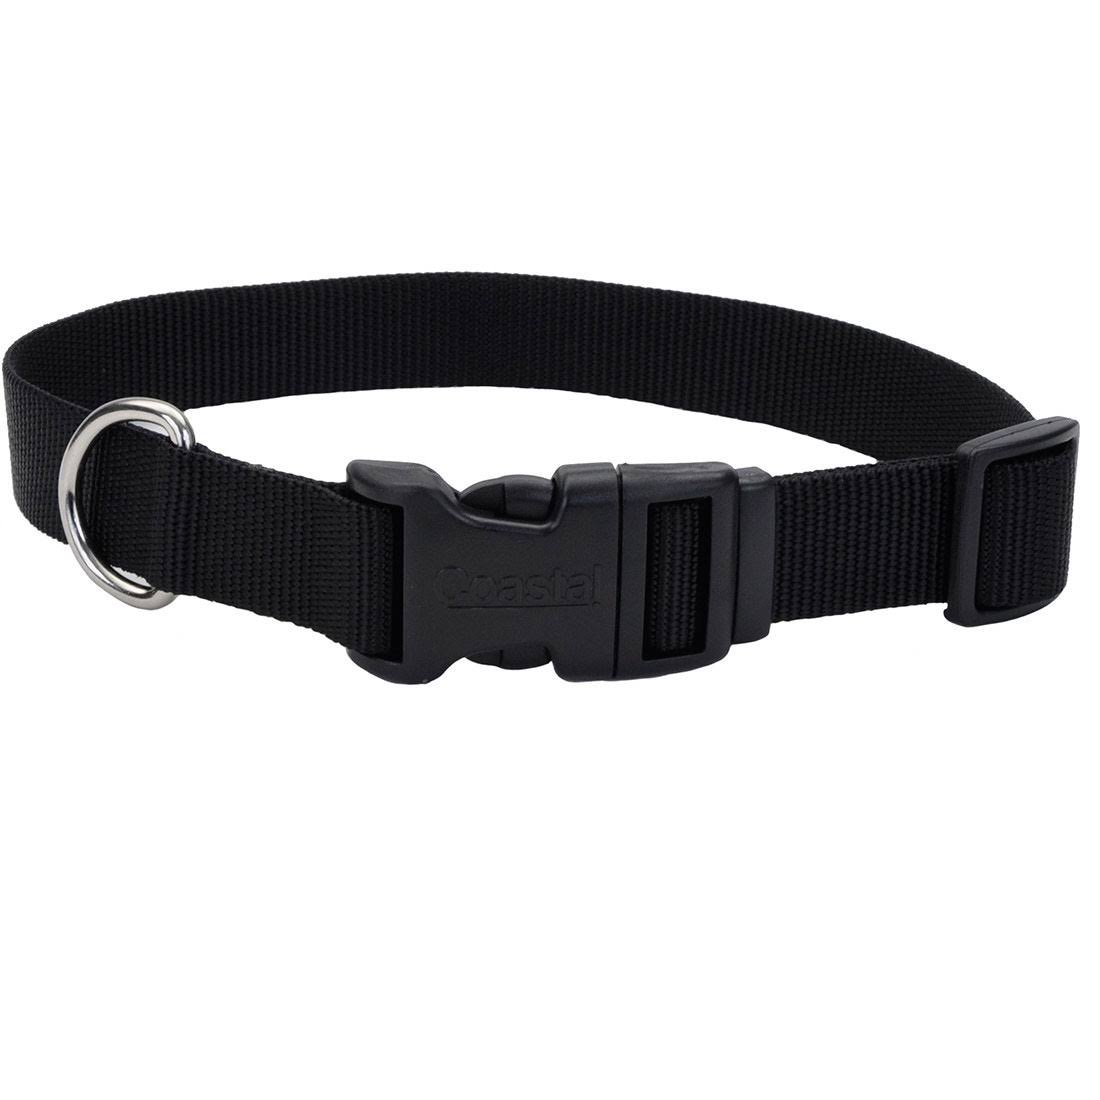 Coastal Pet Products Nylon Adjustable Dog Collar - Black, Small, 5/8" x 14"